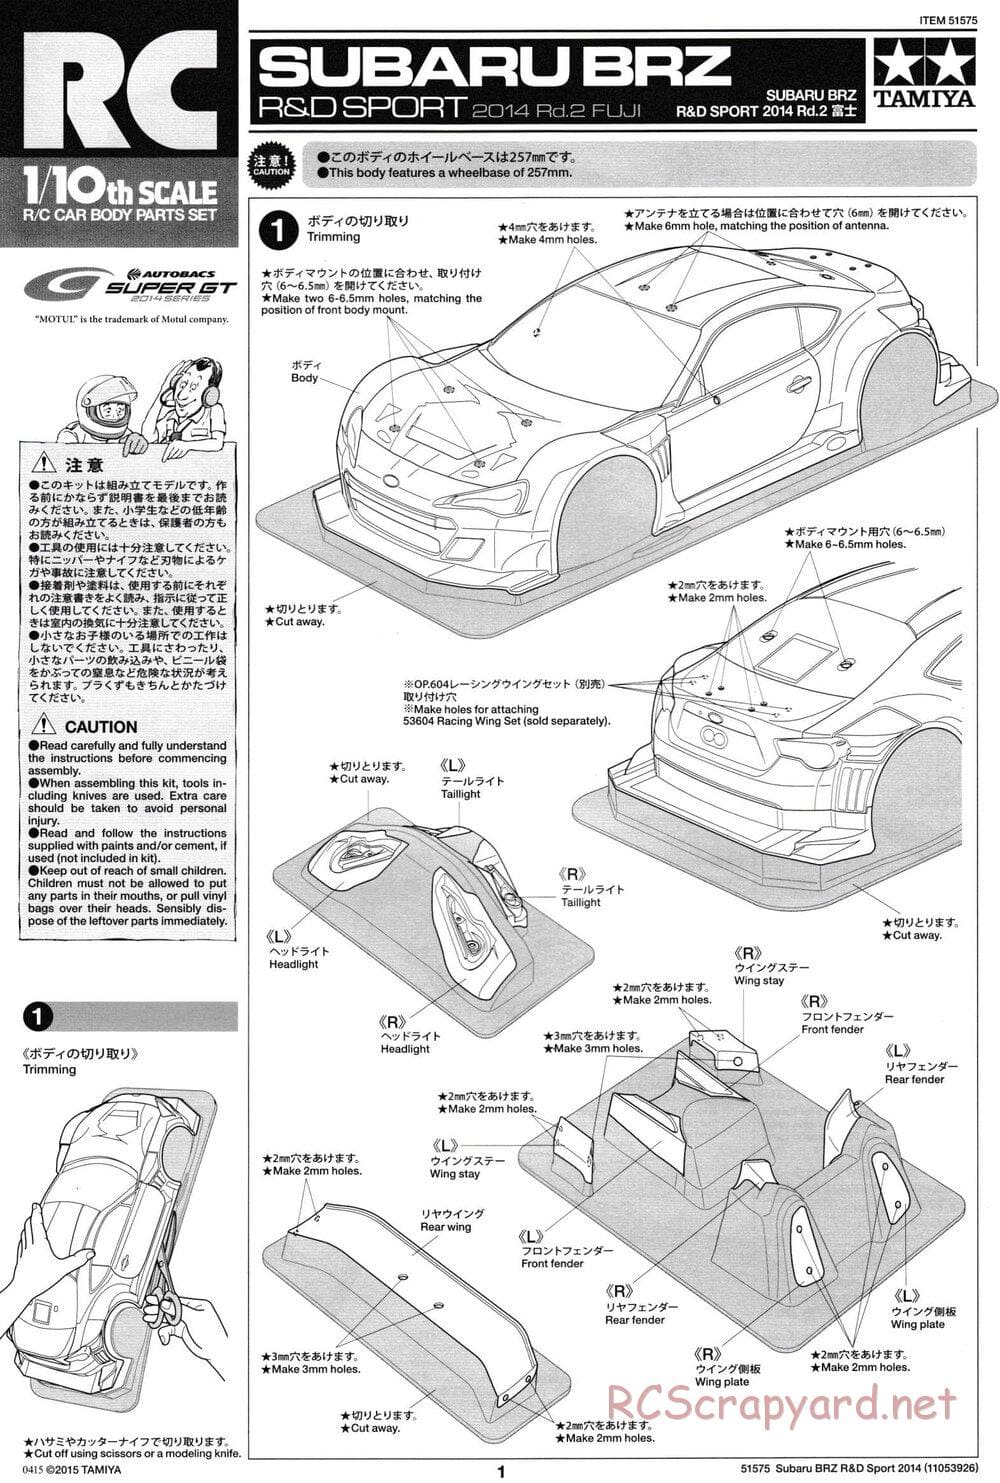 Tamiya - Subaru BRZ R&D Sport 2014 Rd.2 Fuji - TT-02 Chassis - Body Manual - Page 1